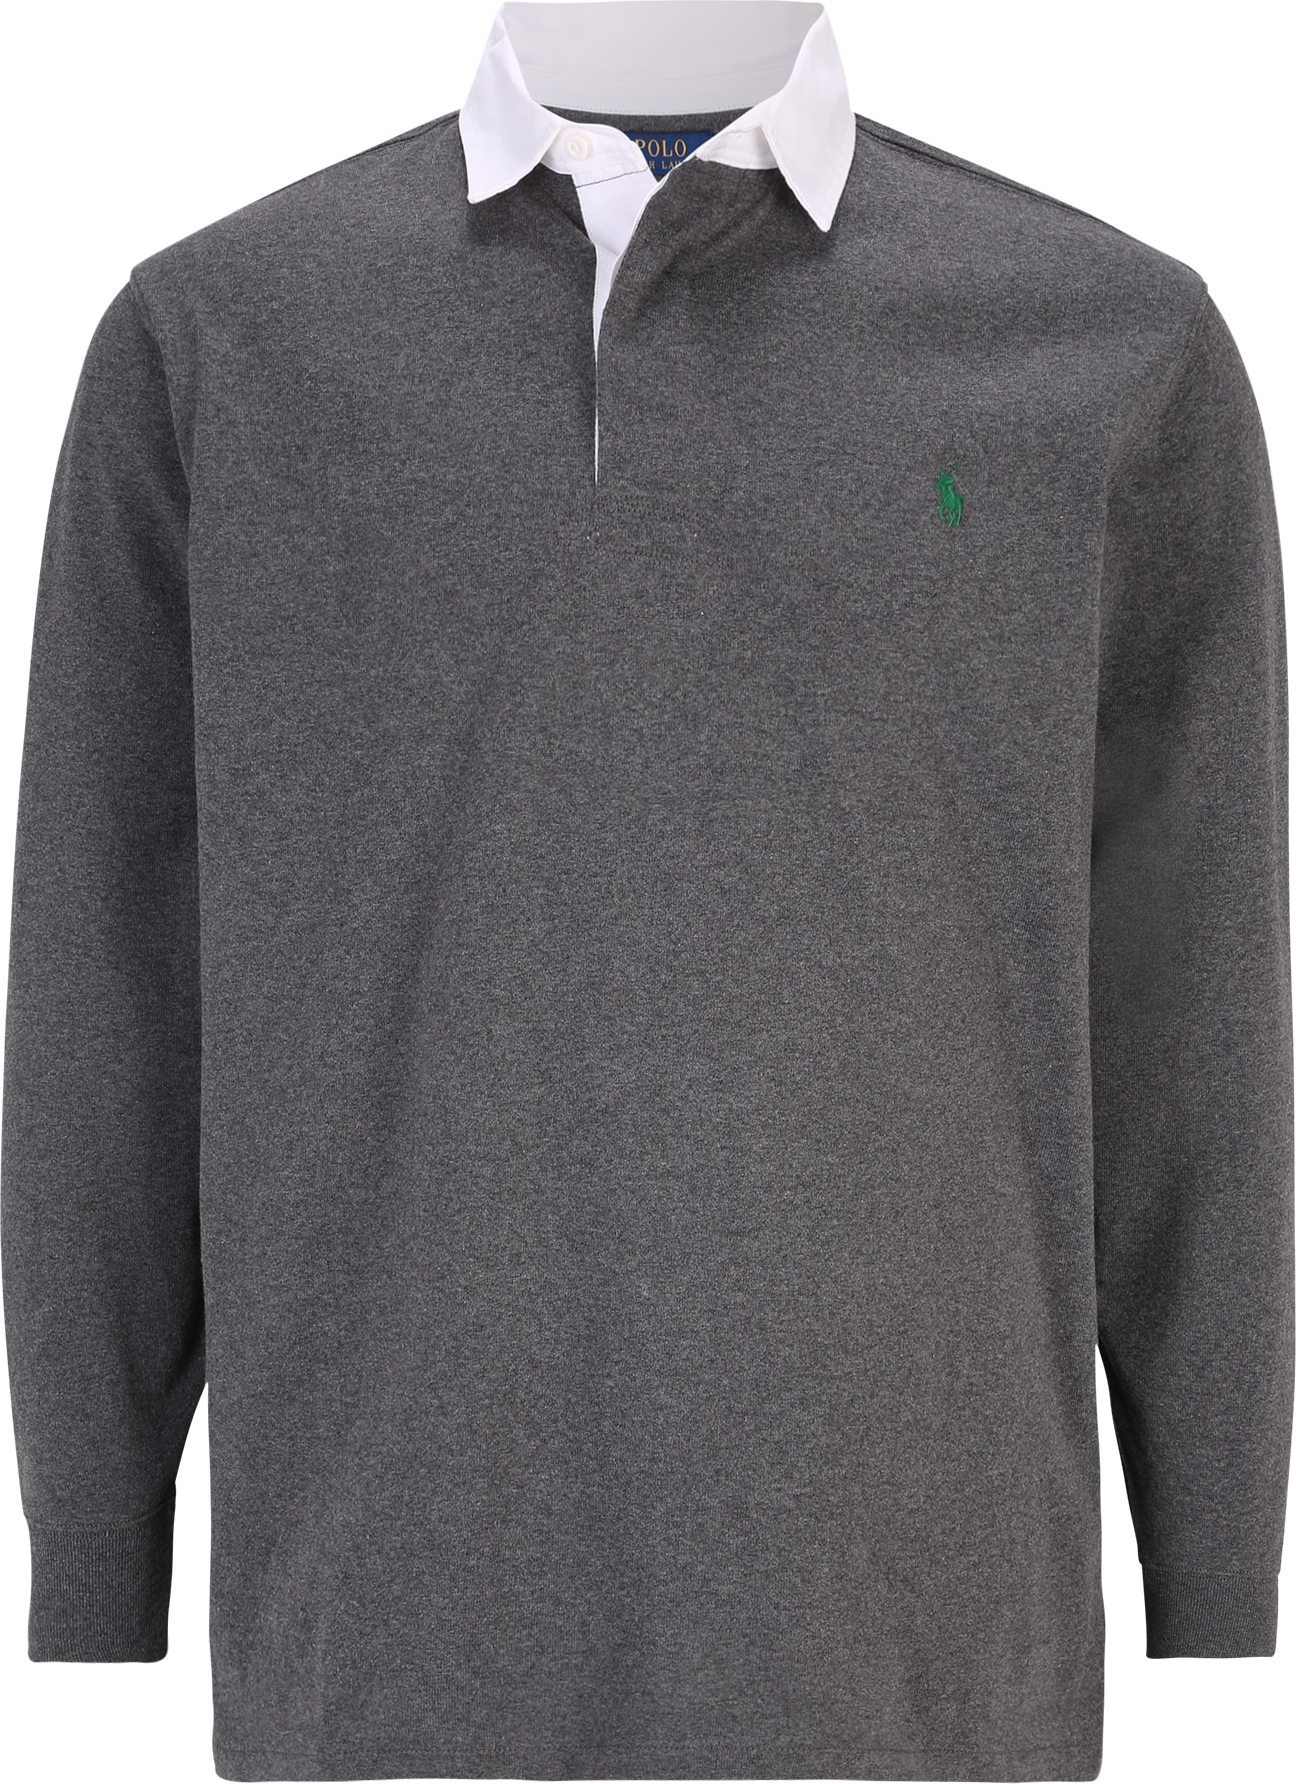 Tričko Polo Ralph Lauren Big & Tall tmavě šedá / zelená / bílá